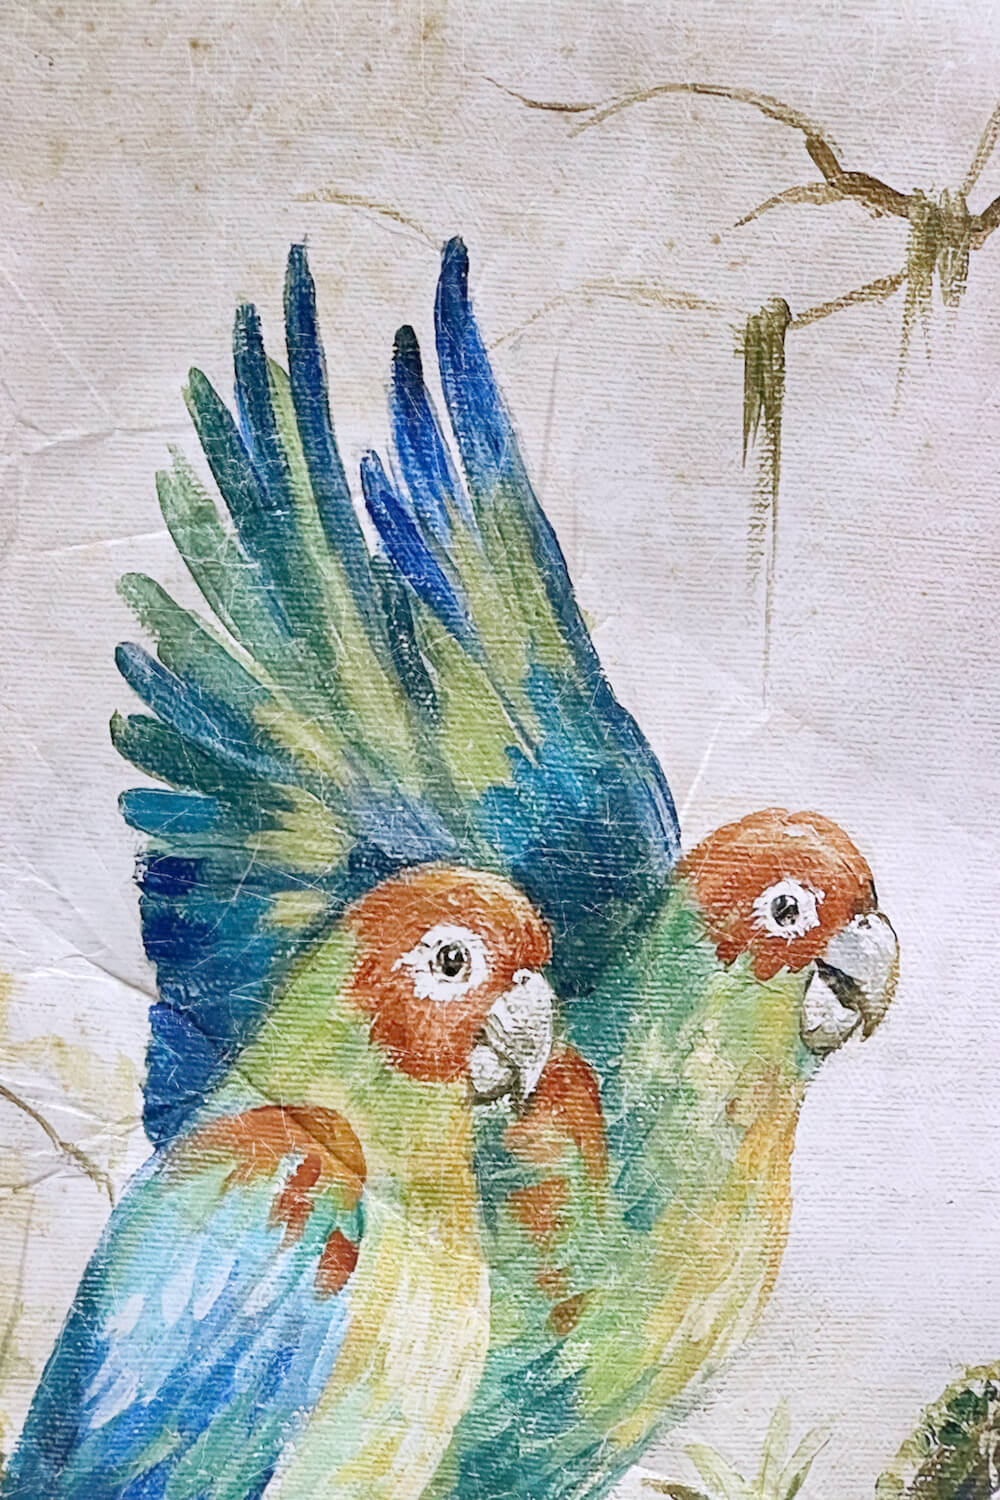 Wandbild 'Blaue Papageien'  90x120